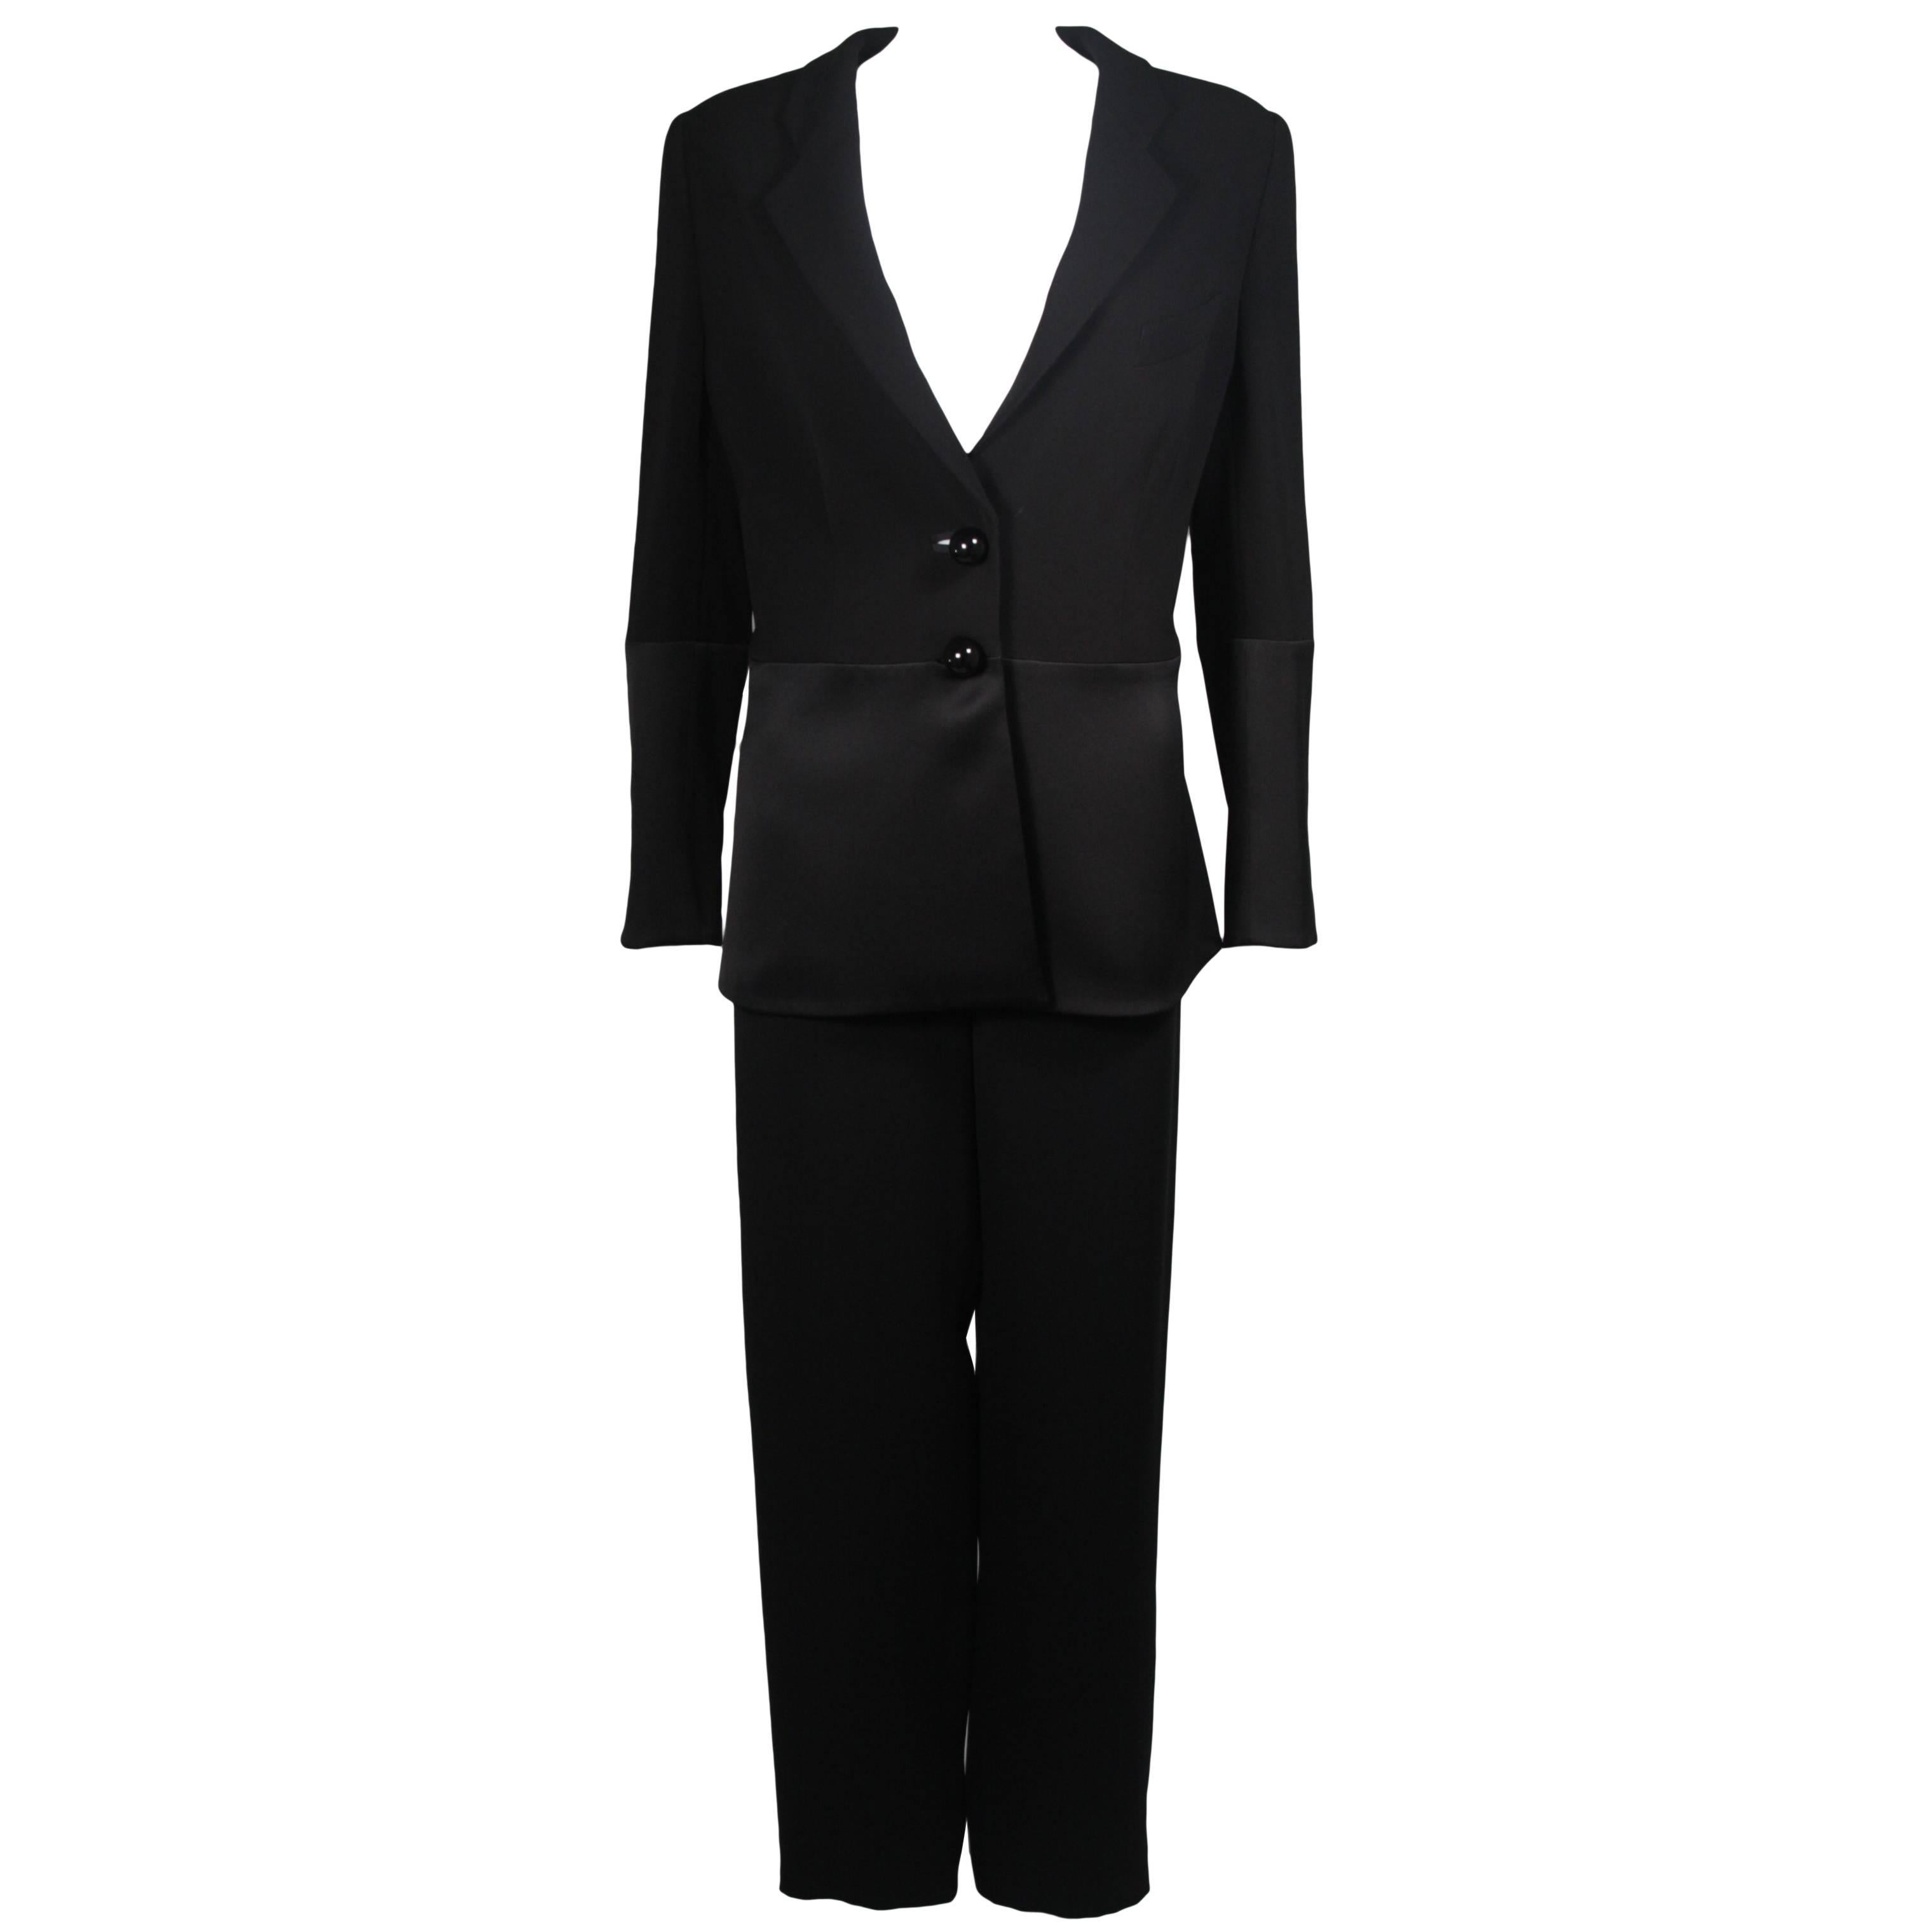 Giorgio Armani Tuxedo Style Black Silk Pant Suit with Satin Accent Size Large